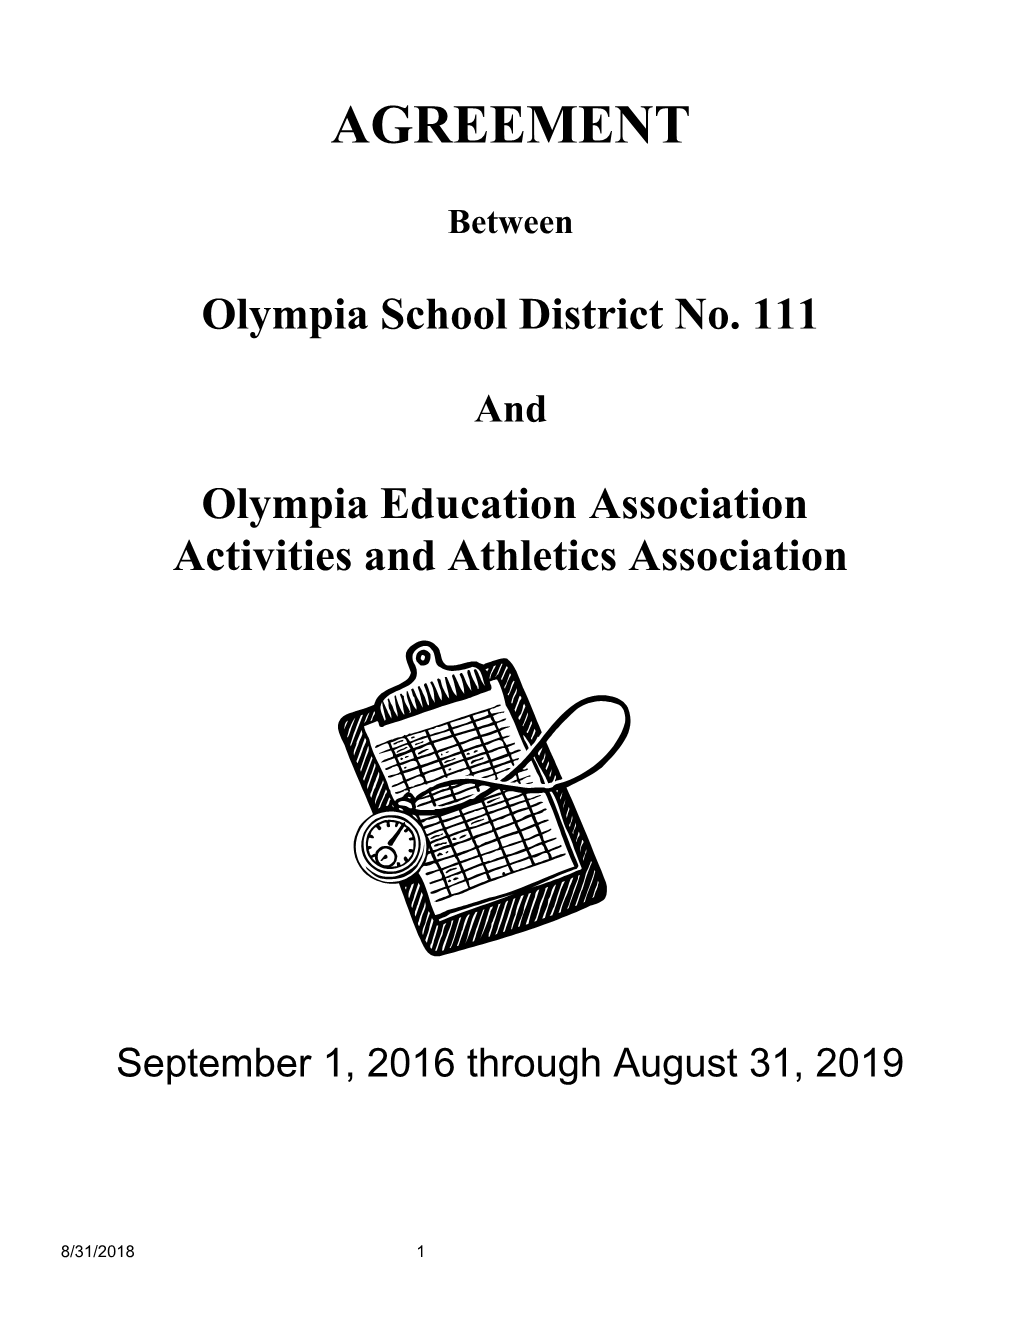 Olympia School District No. 111